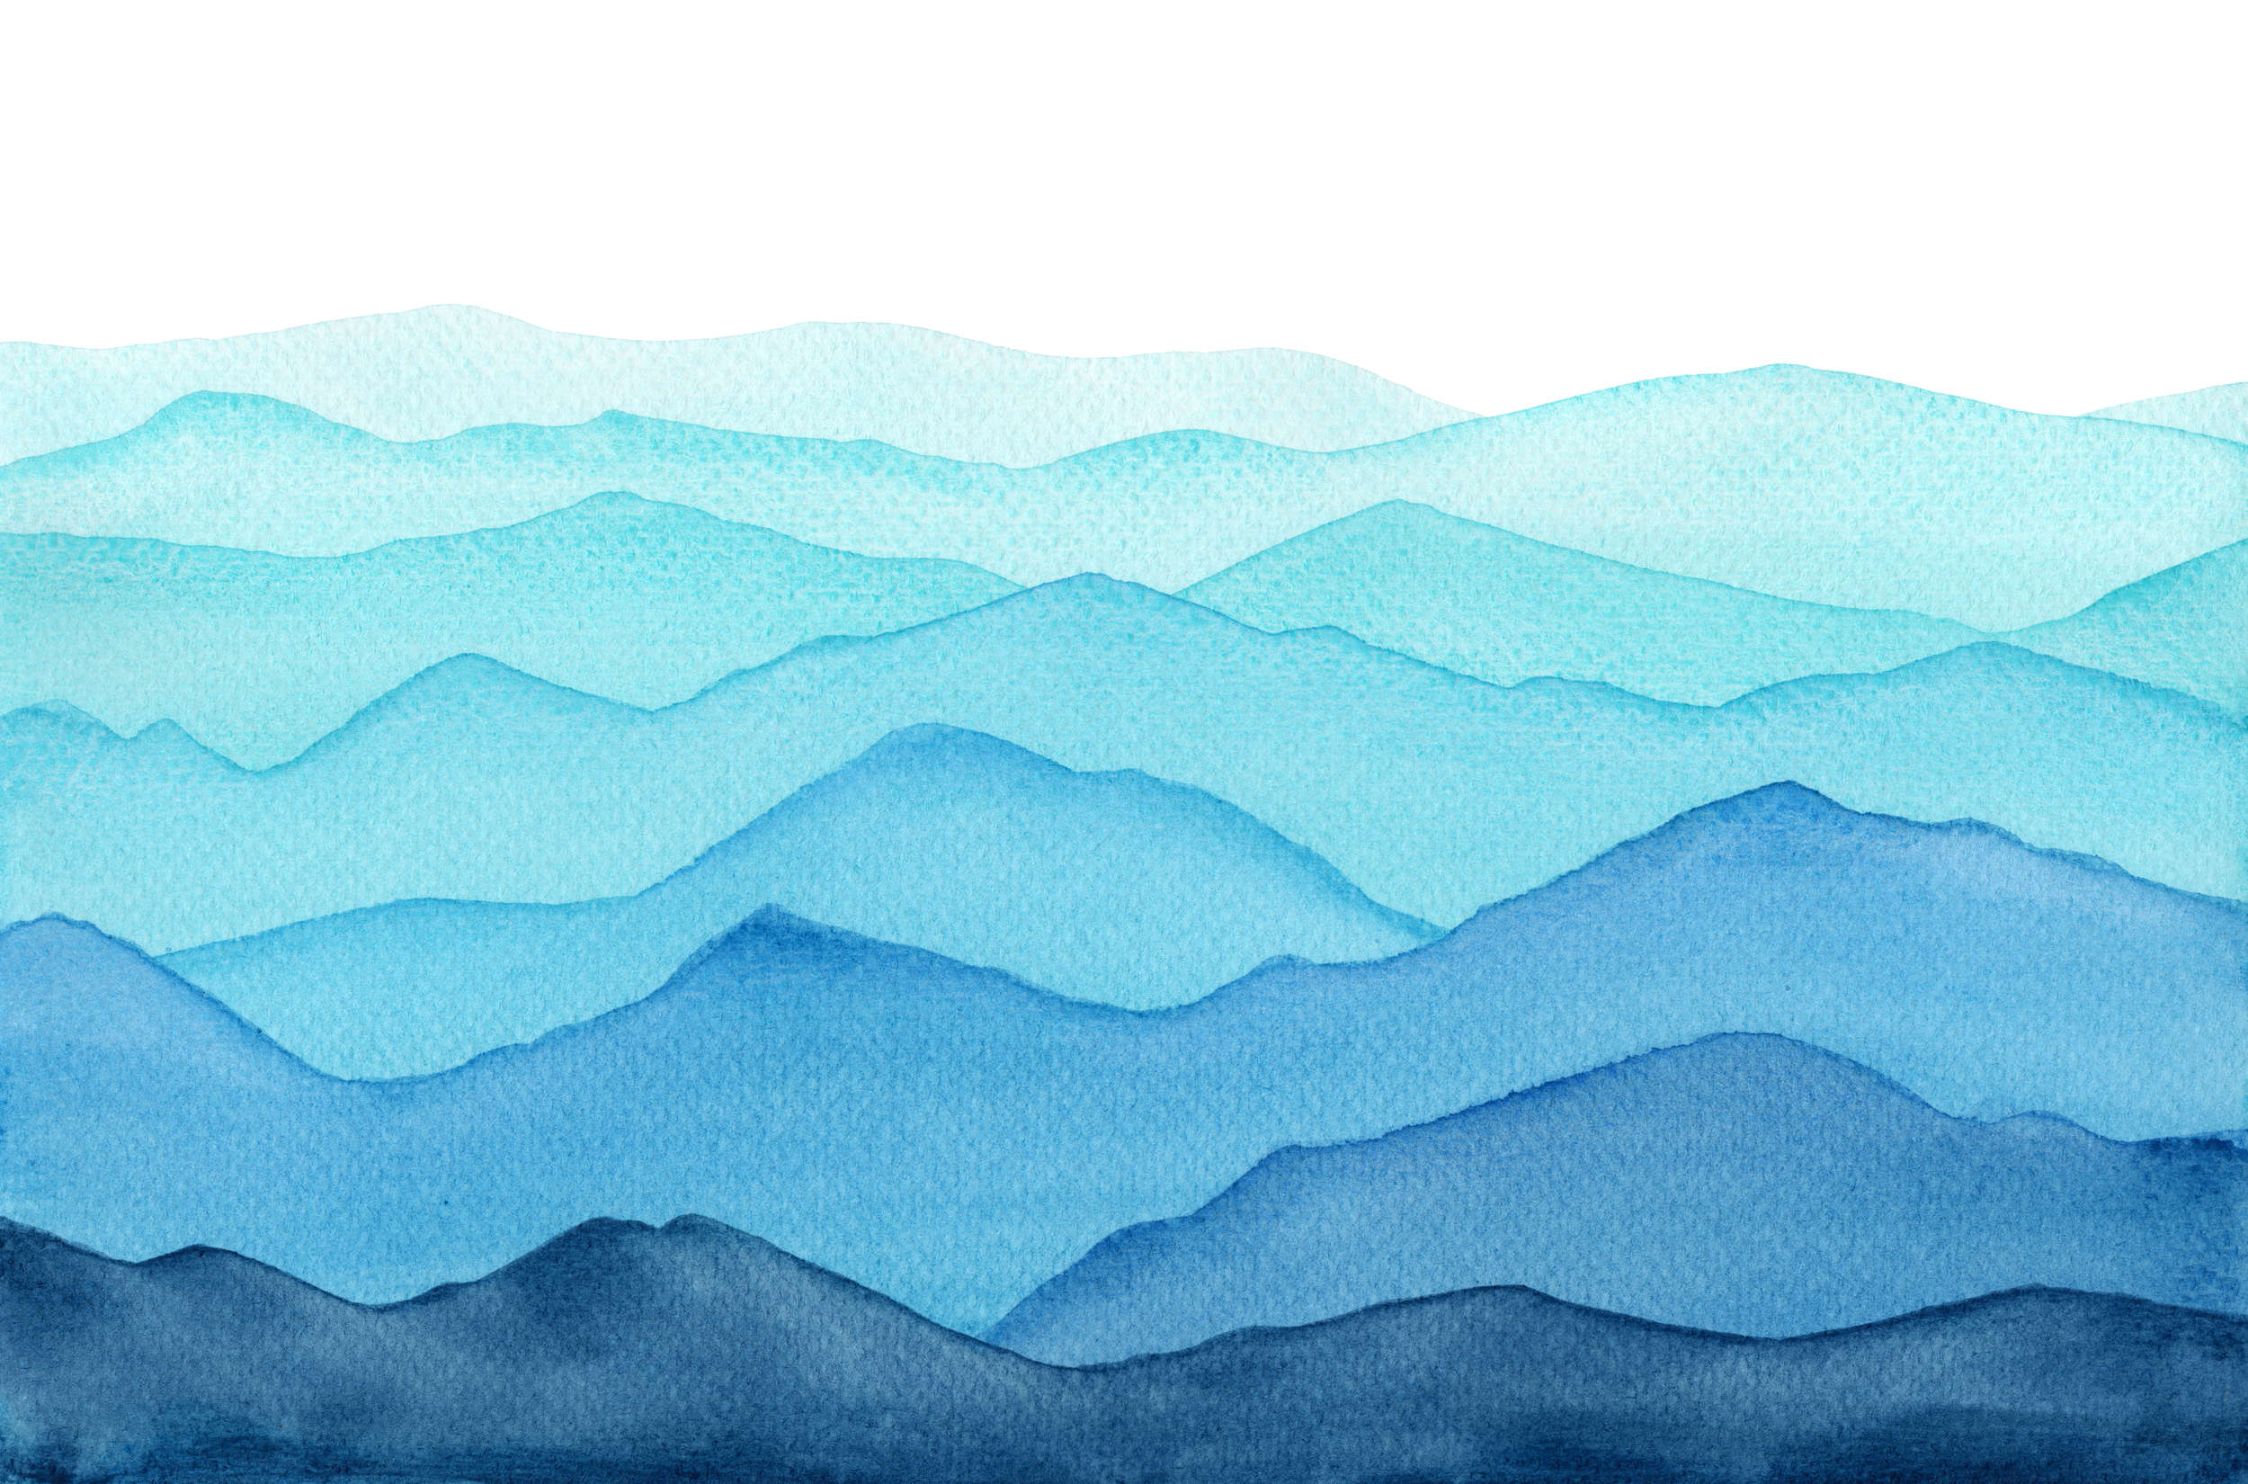             Fototapete Meer mit Wellen in aquarell – Strukturiertes Vlies
        